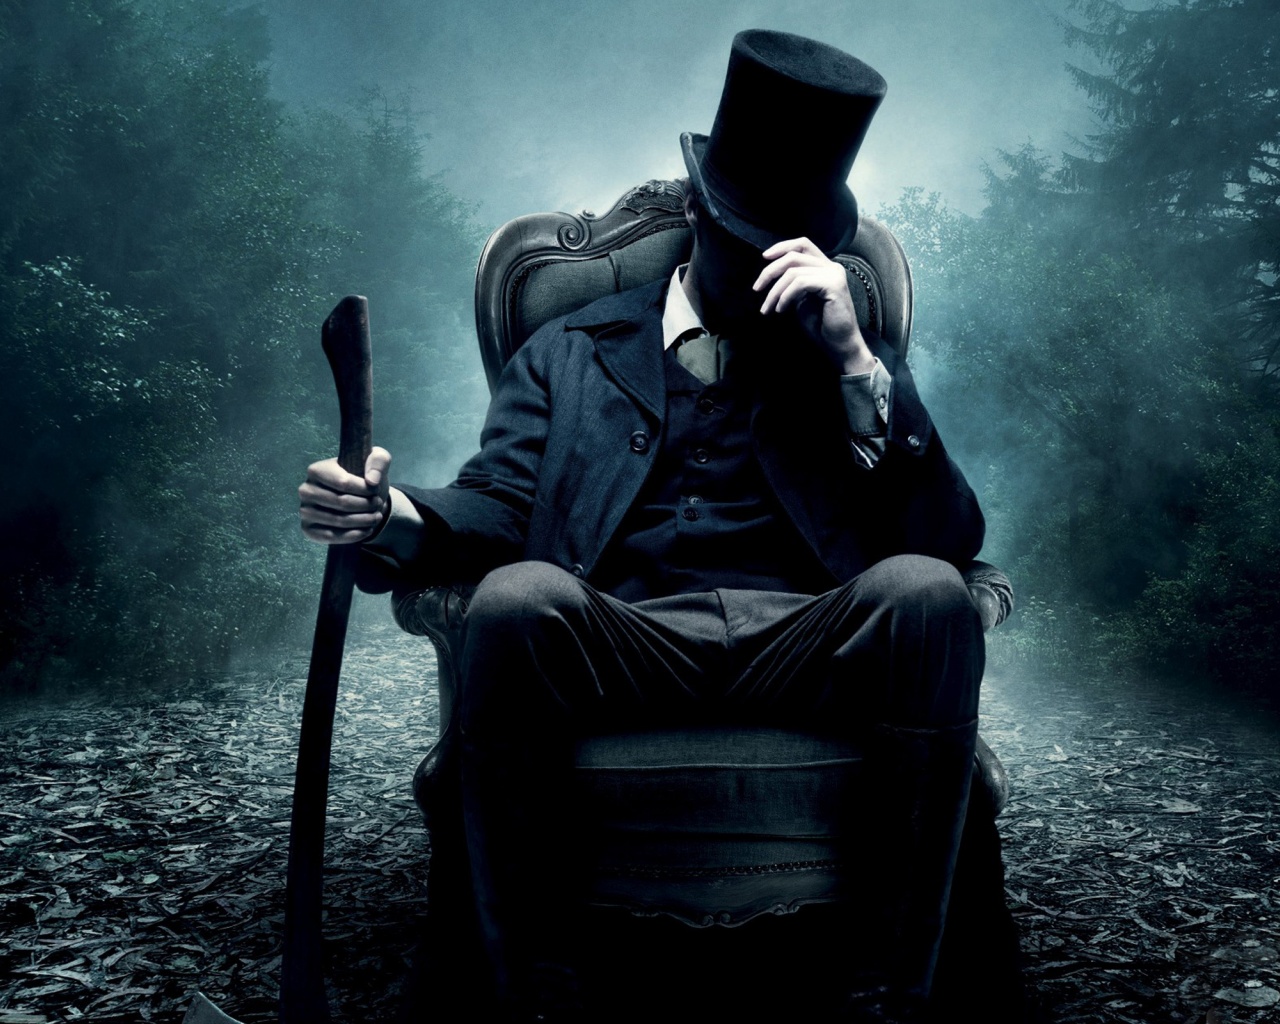 Abraham Lincoln Vampire Hunter